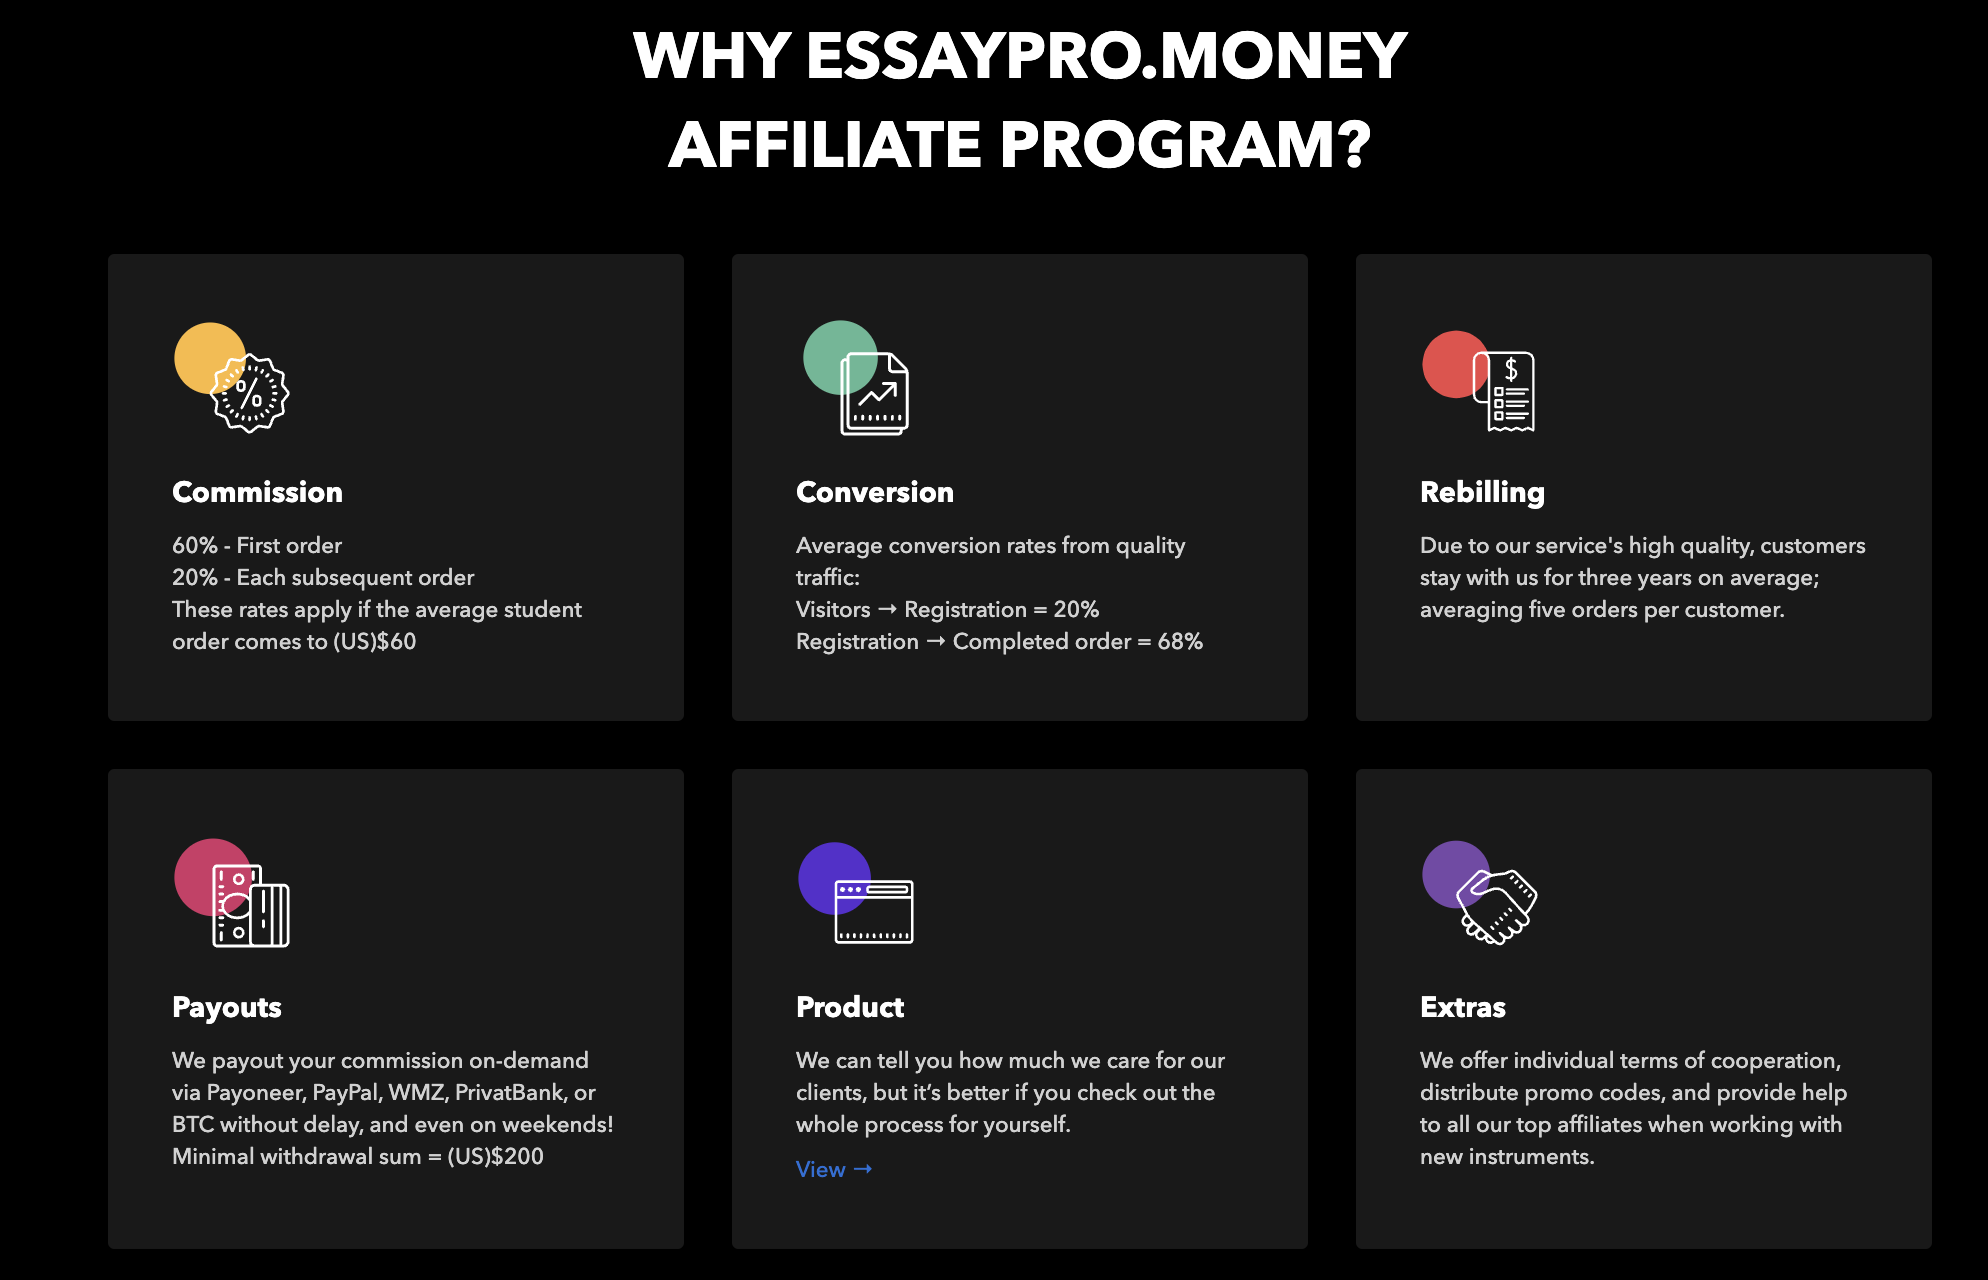 Why essaypro.money